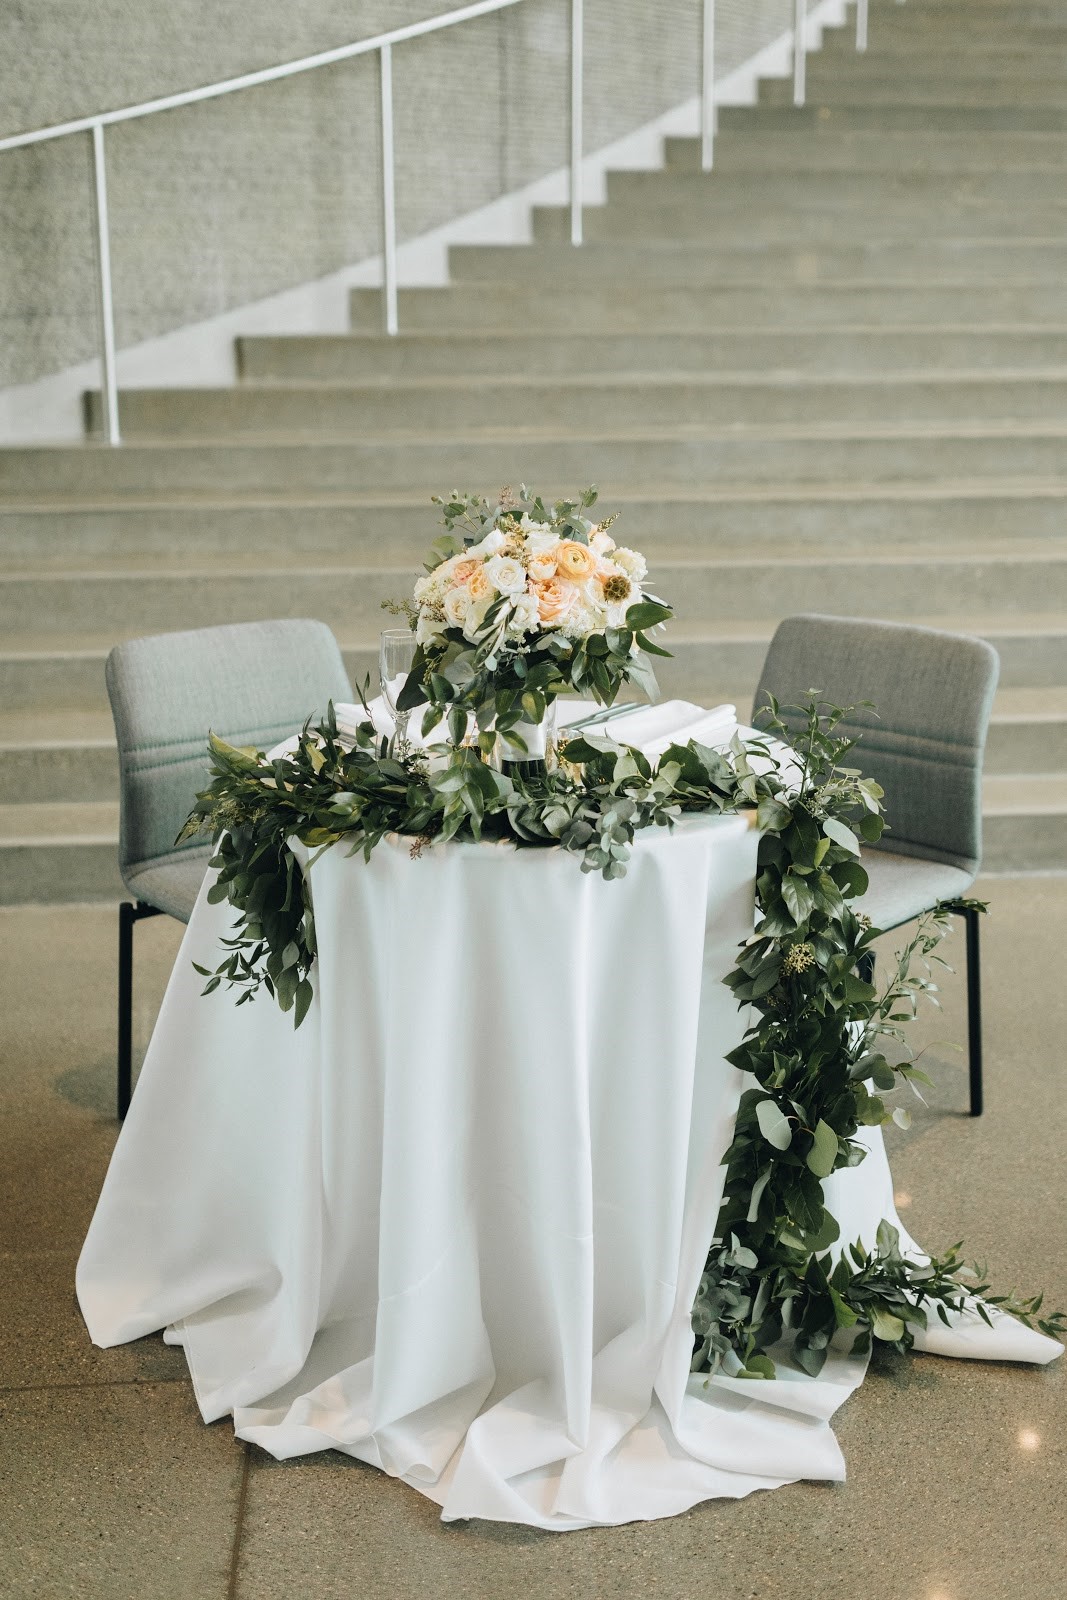 Table with flower arrangement centerpiece